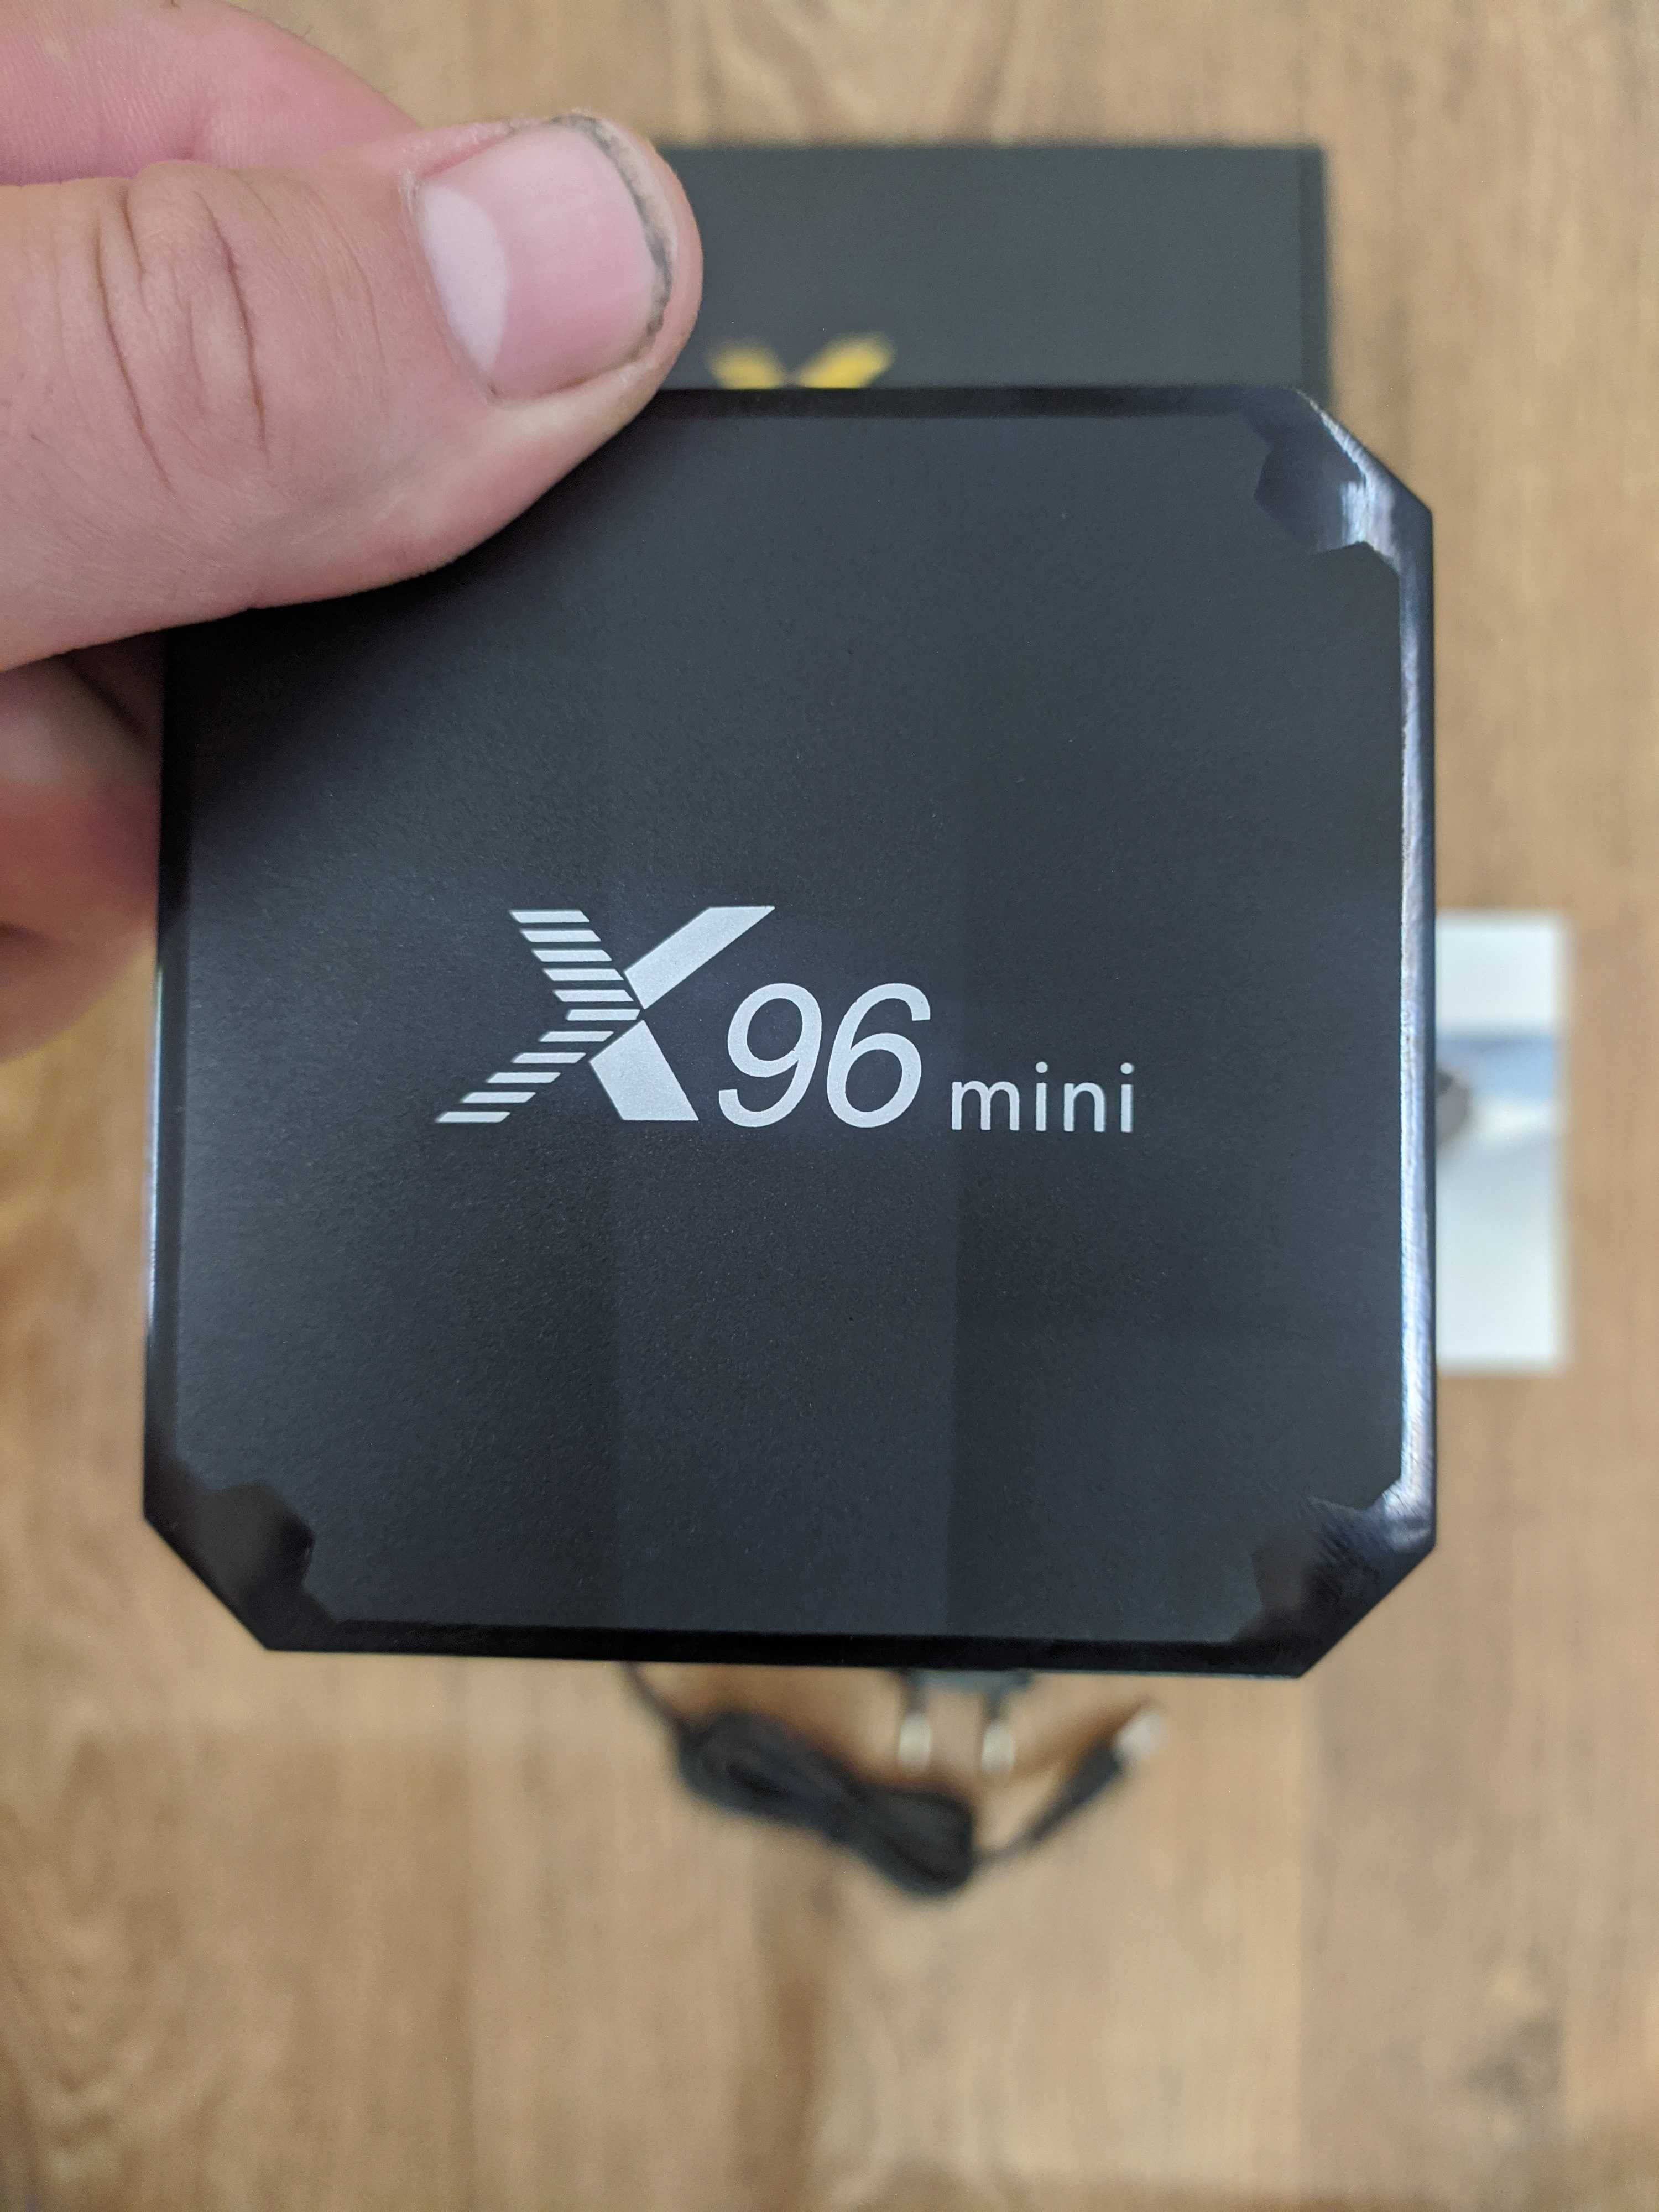 [НАСТРОЙКА] X96 mini 2/16 Смарт тв приставка (Smart TV Box) IPTV